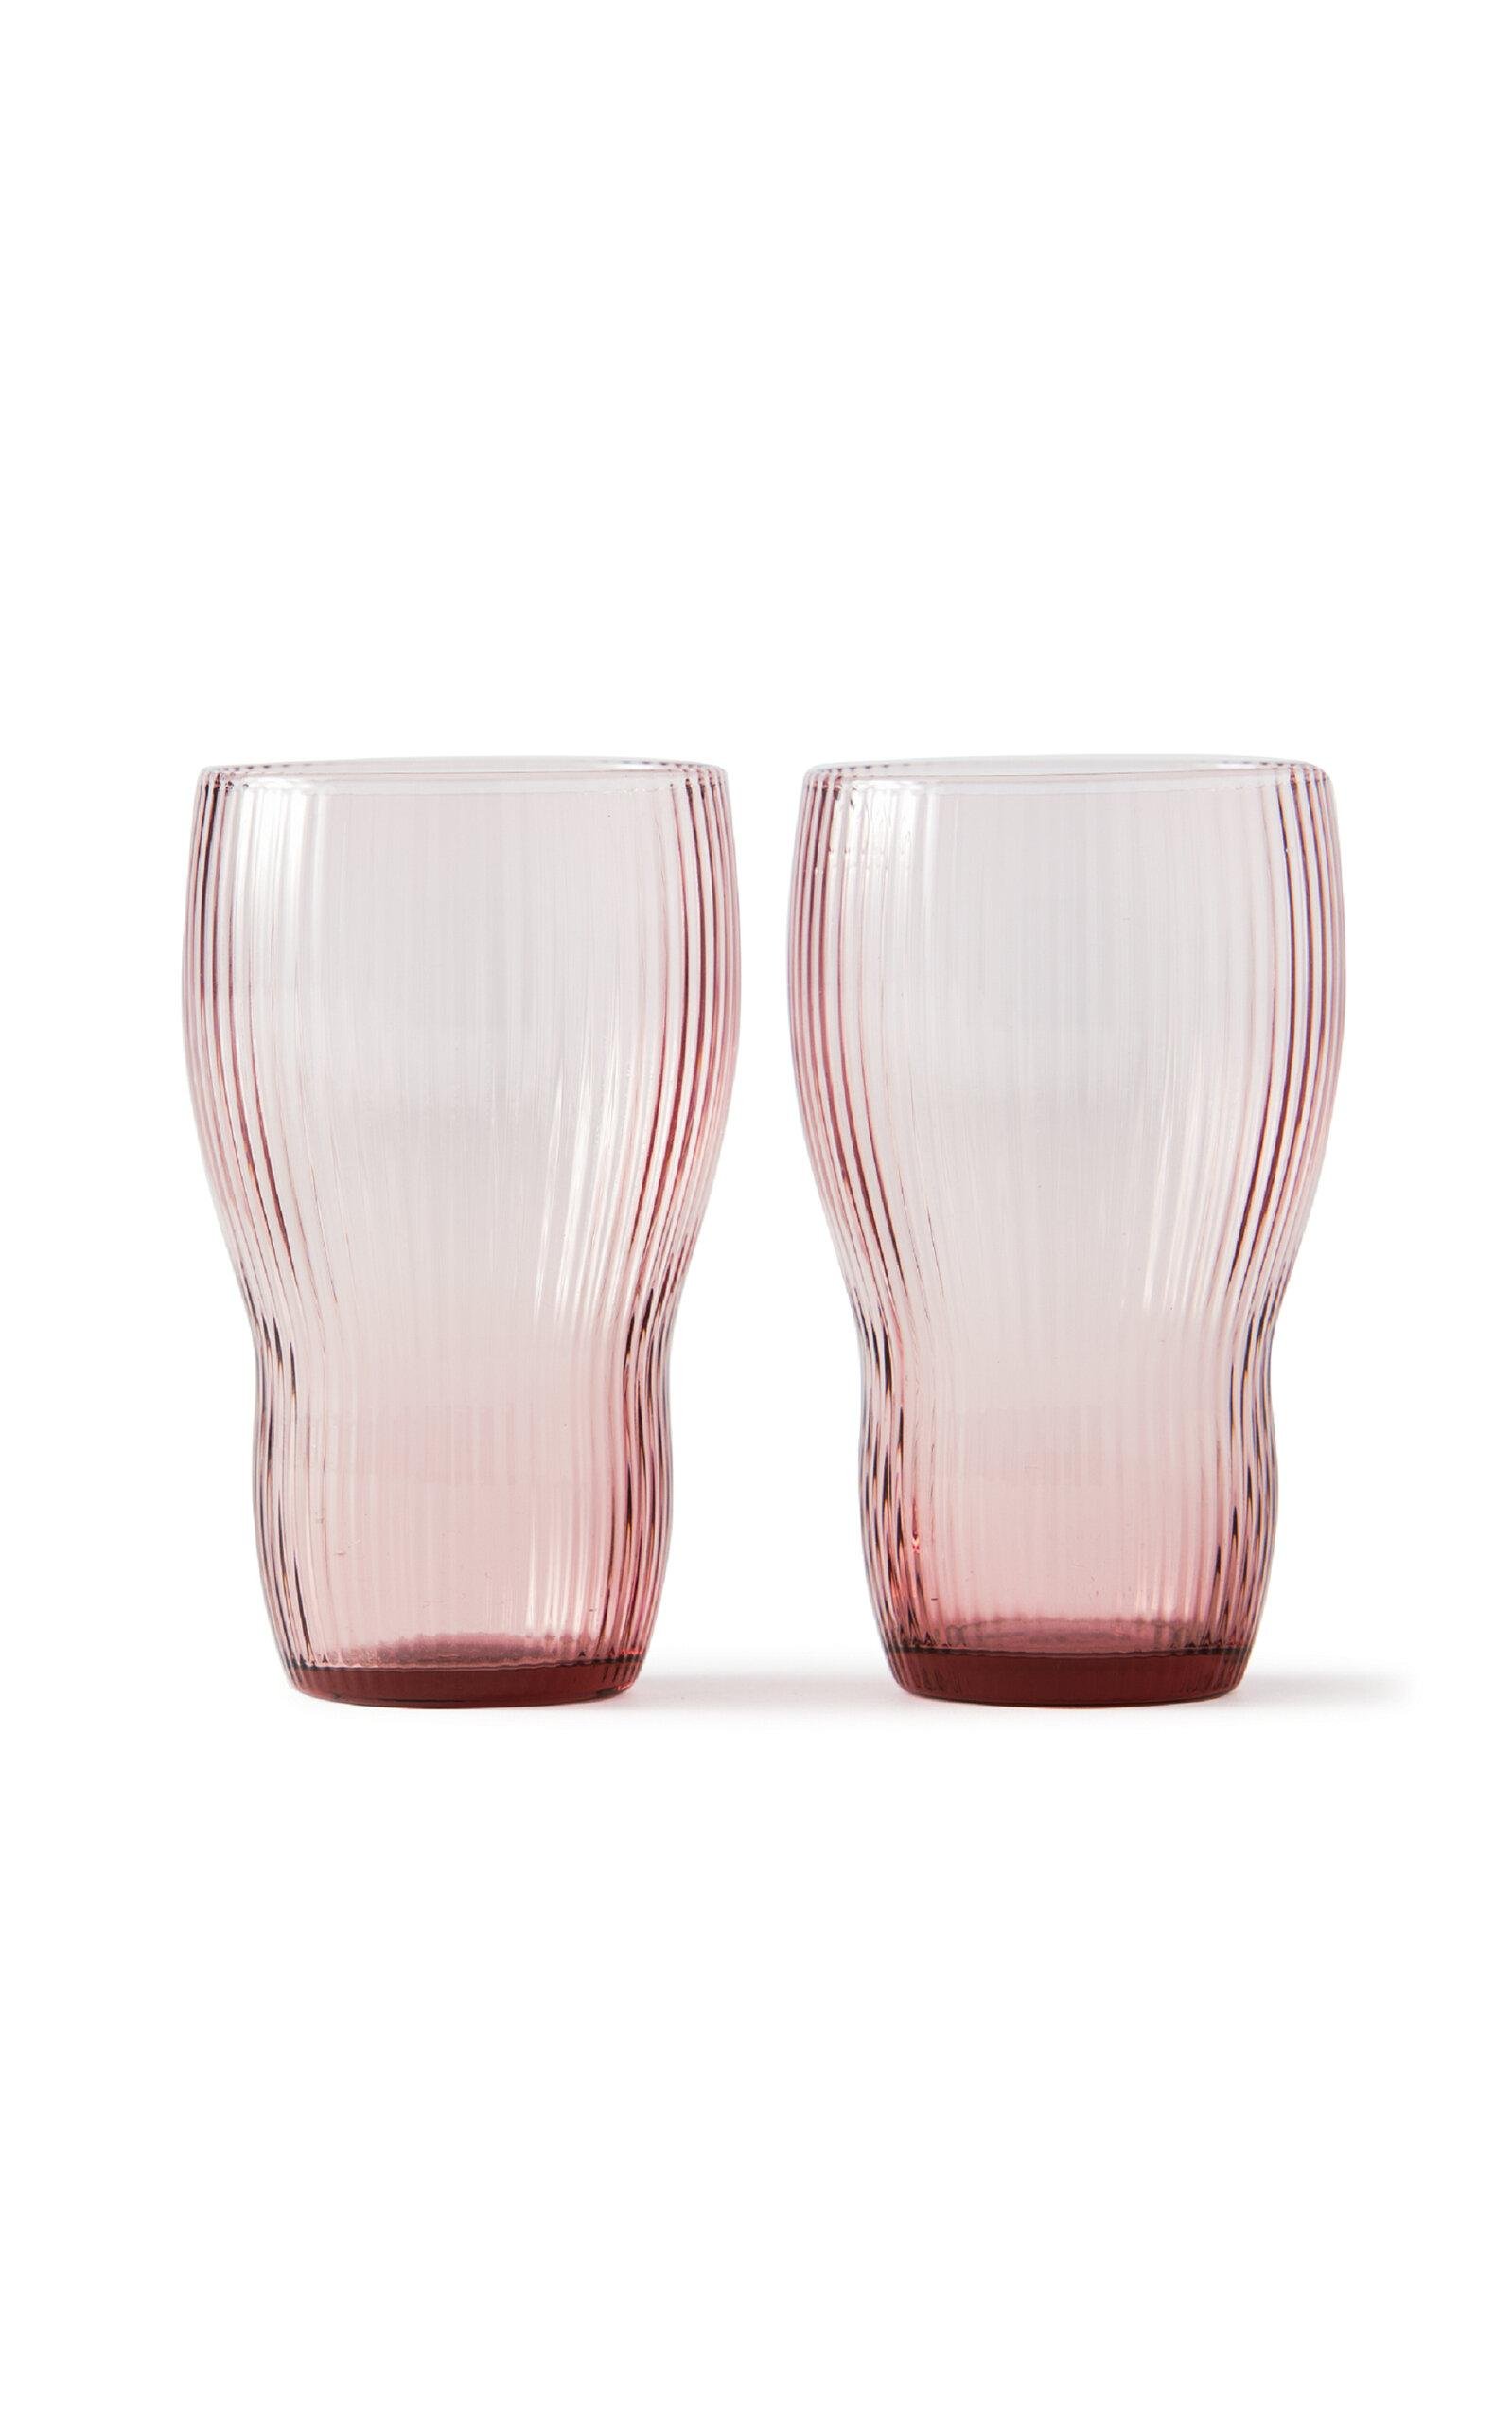 POLSPOTTEN - Set-of-Two Pum Glasses - Light Pink - Moda Operandi by POLSPOTTEN